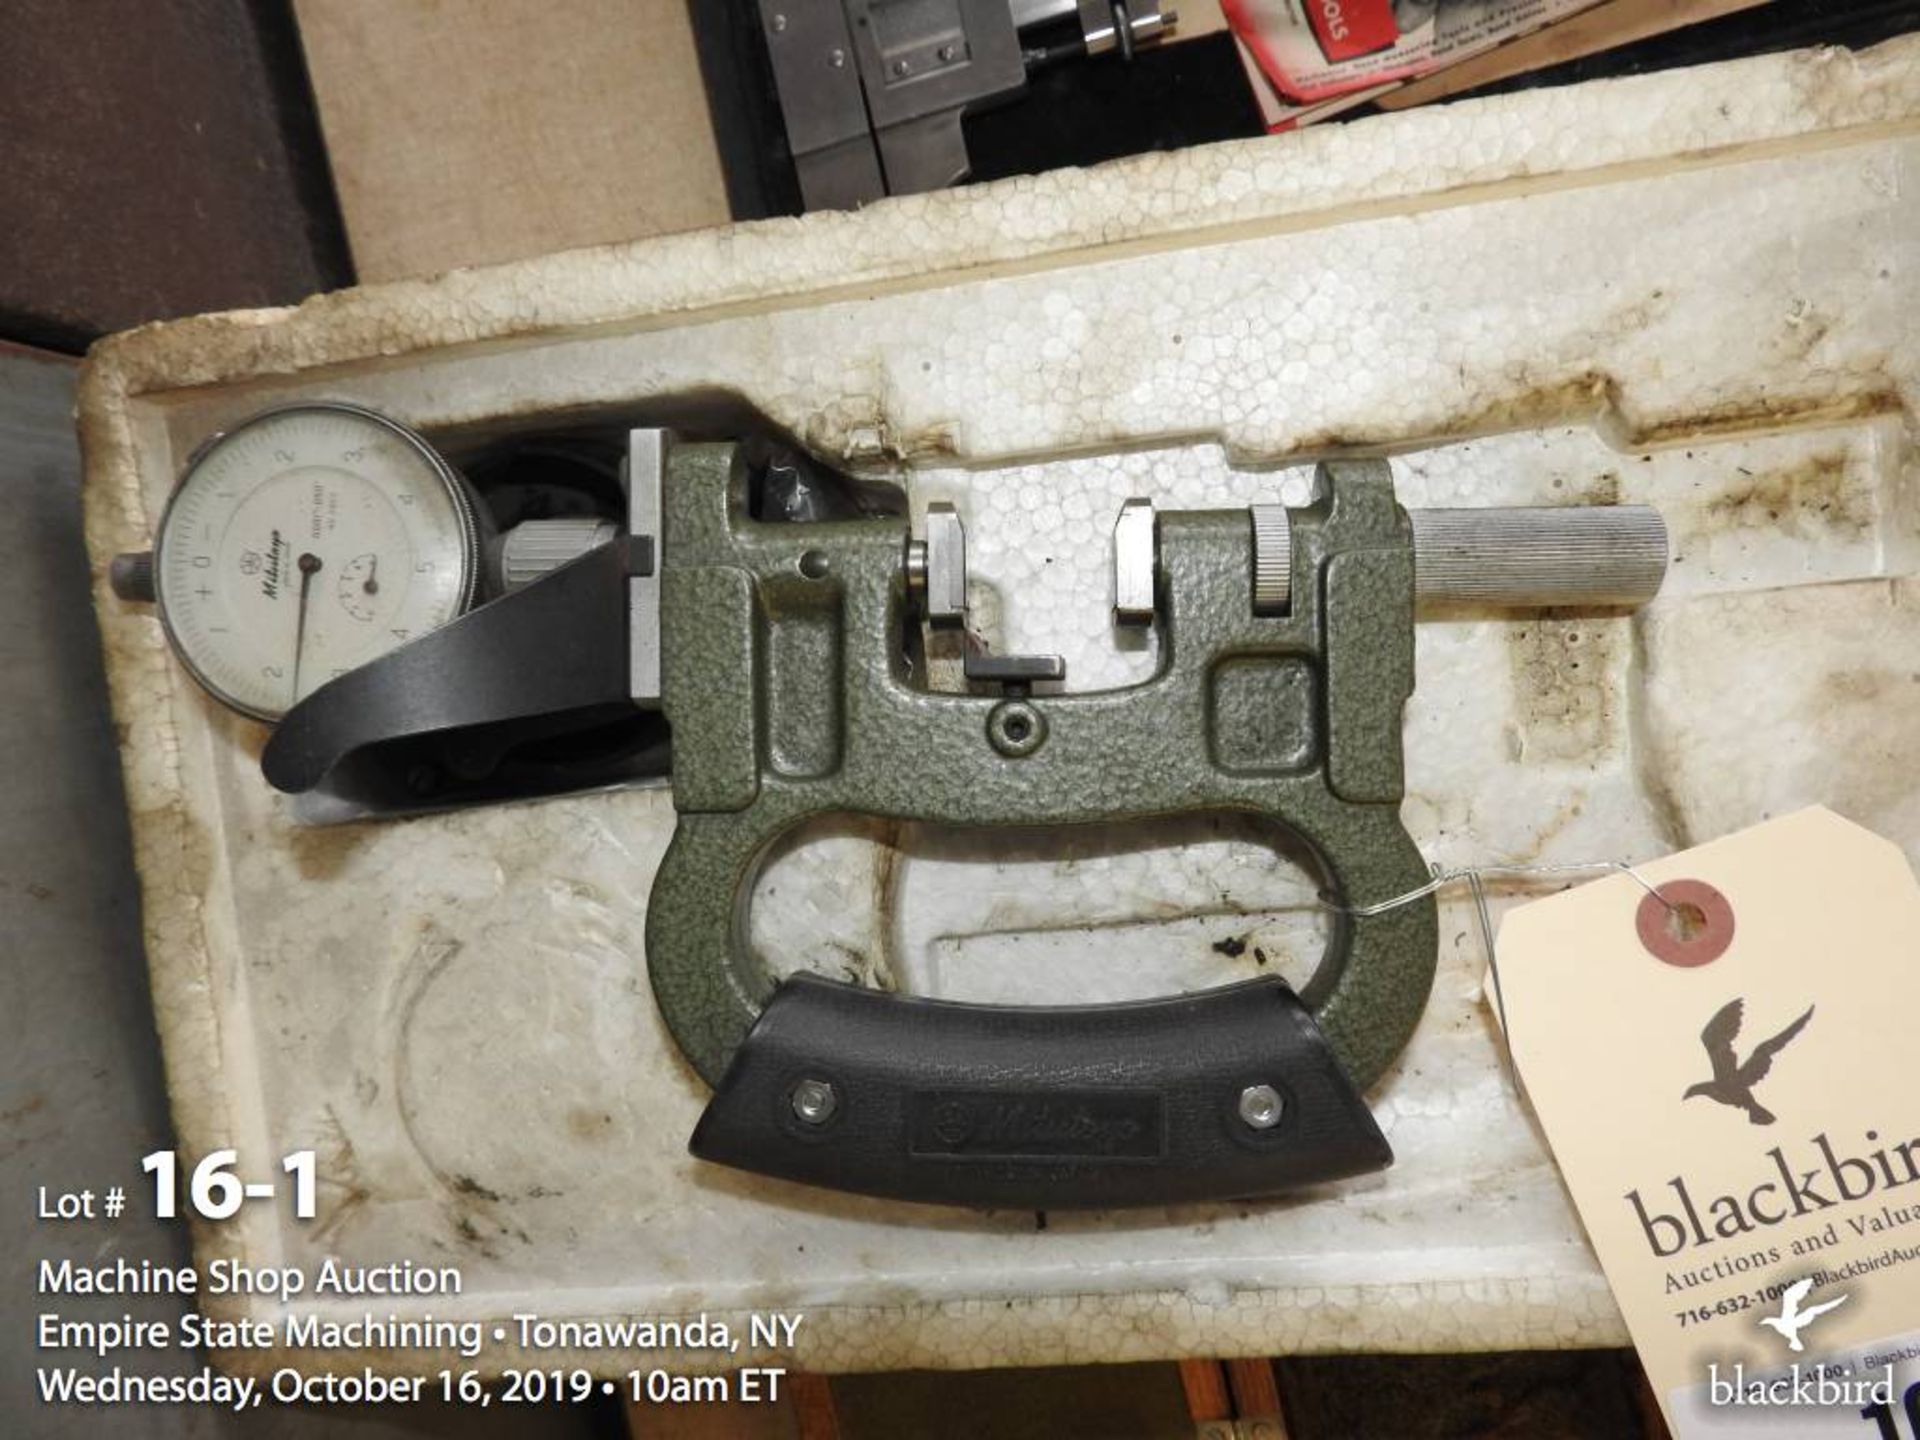 Mitutoyo dial snap gauge, 0-1" with Starrett #122, 0-12" vernier caliper